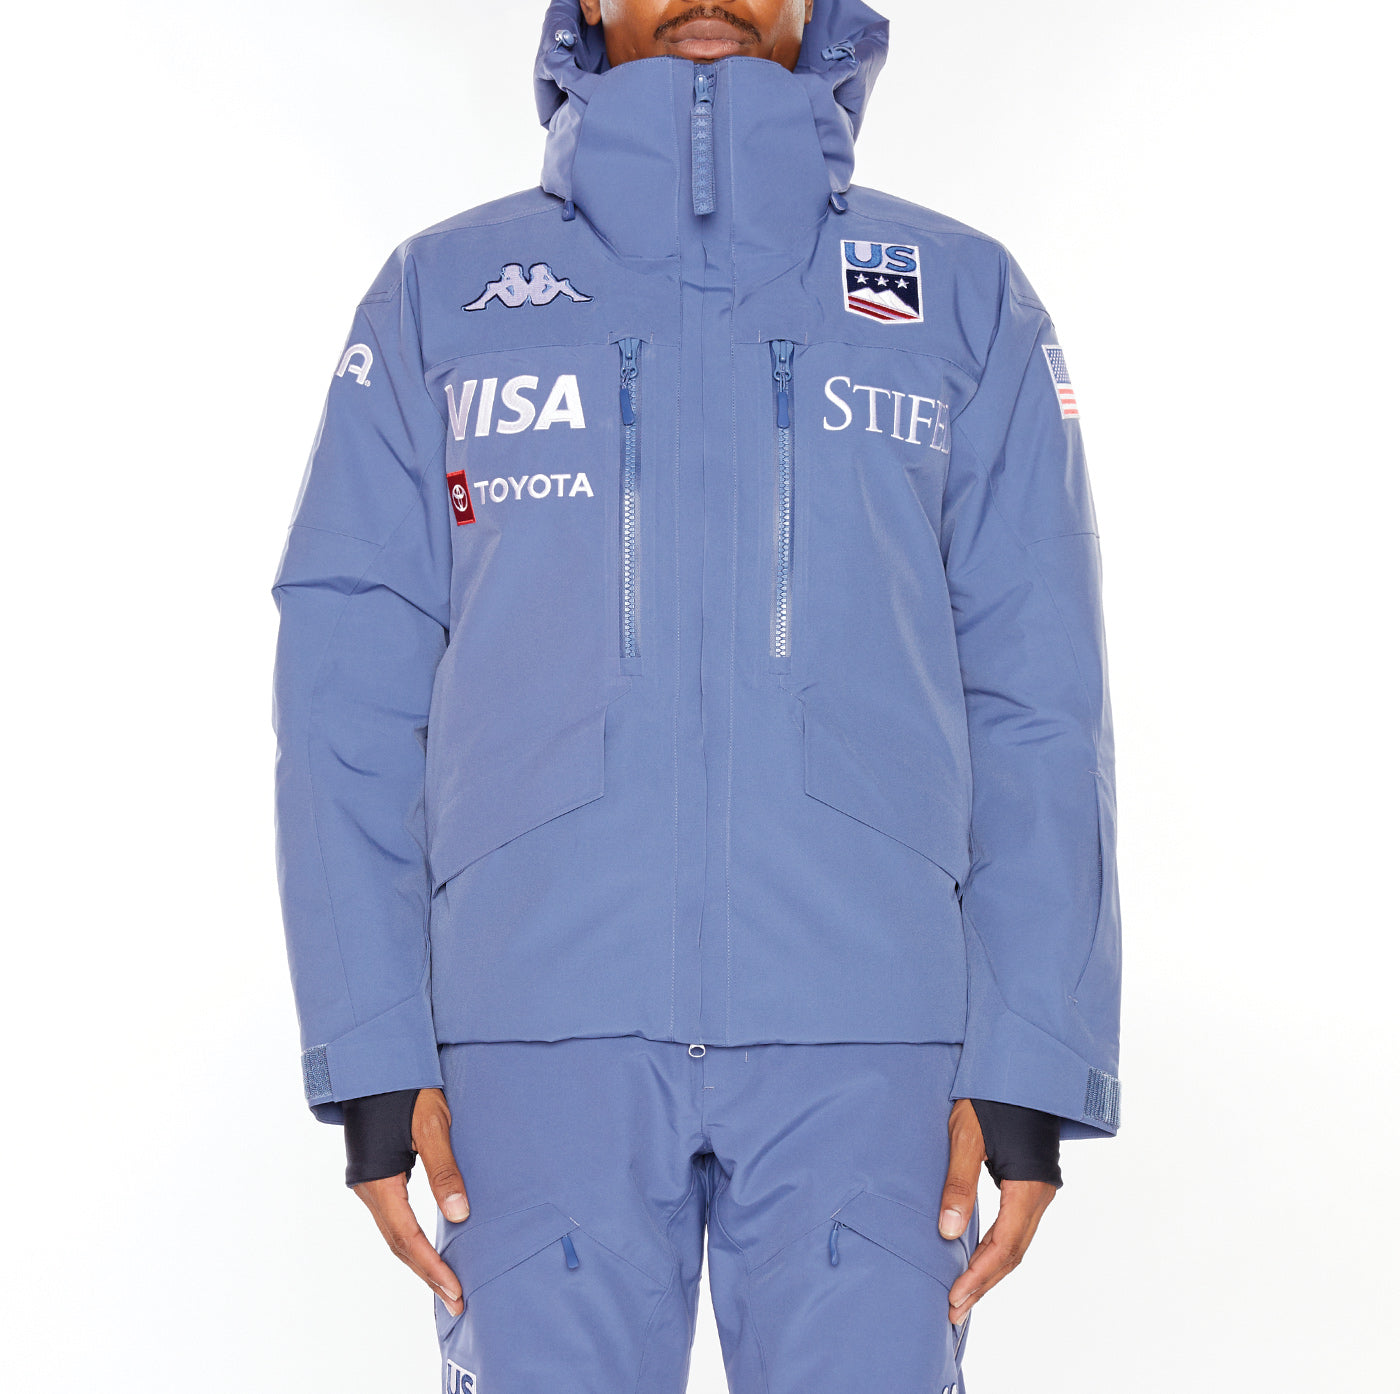 - US Fiord 602T 6Cento Ski Jacket – USA Kappa Blue